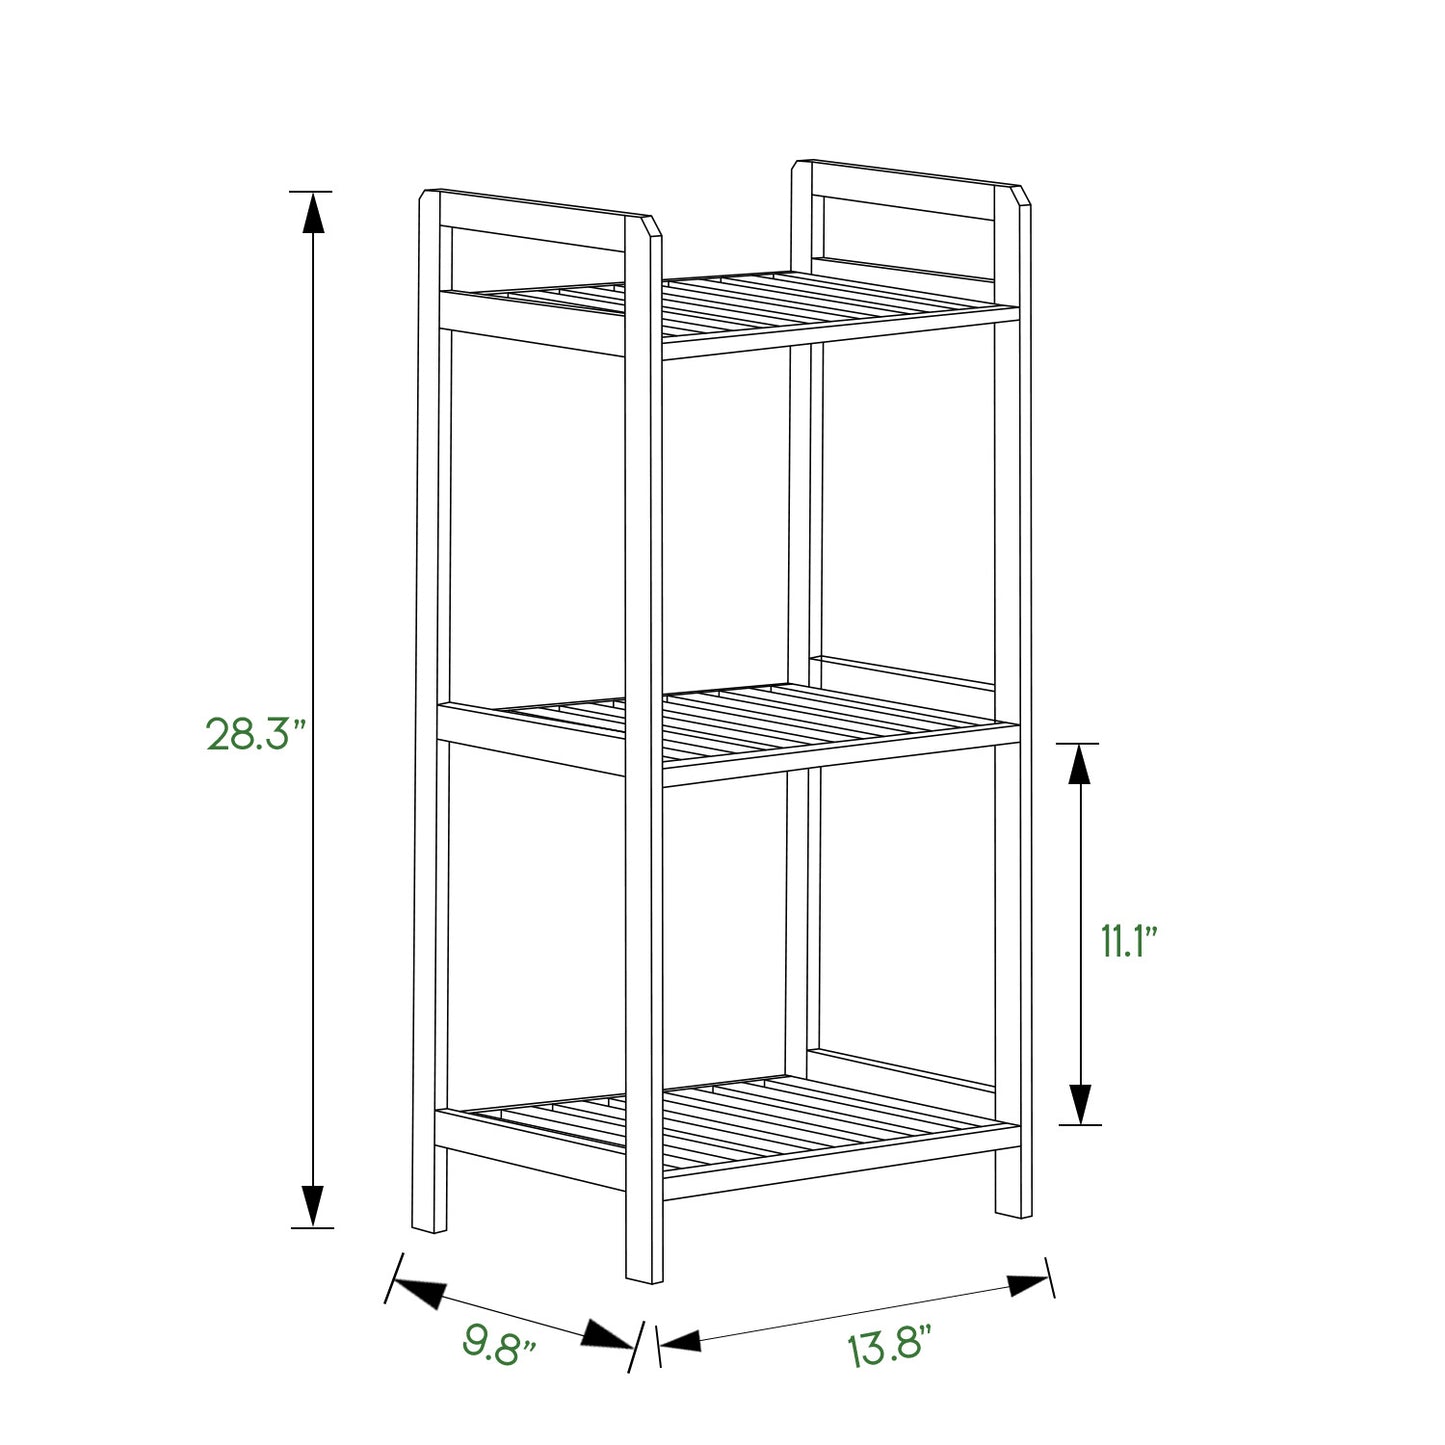 Adjustable Shoe Rack Entryway Shelf Organizer - 3 Tier - Natural